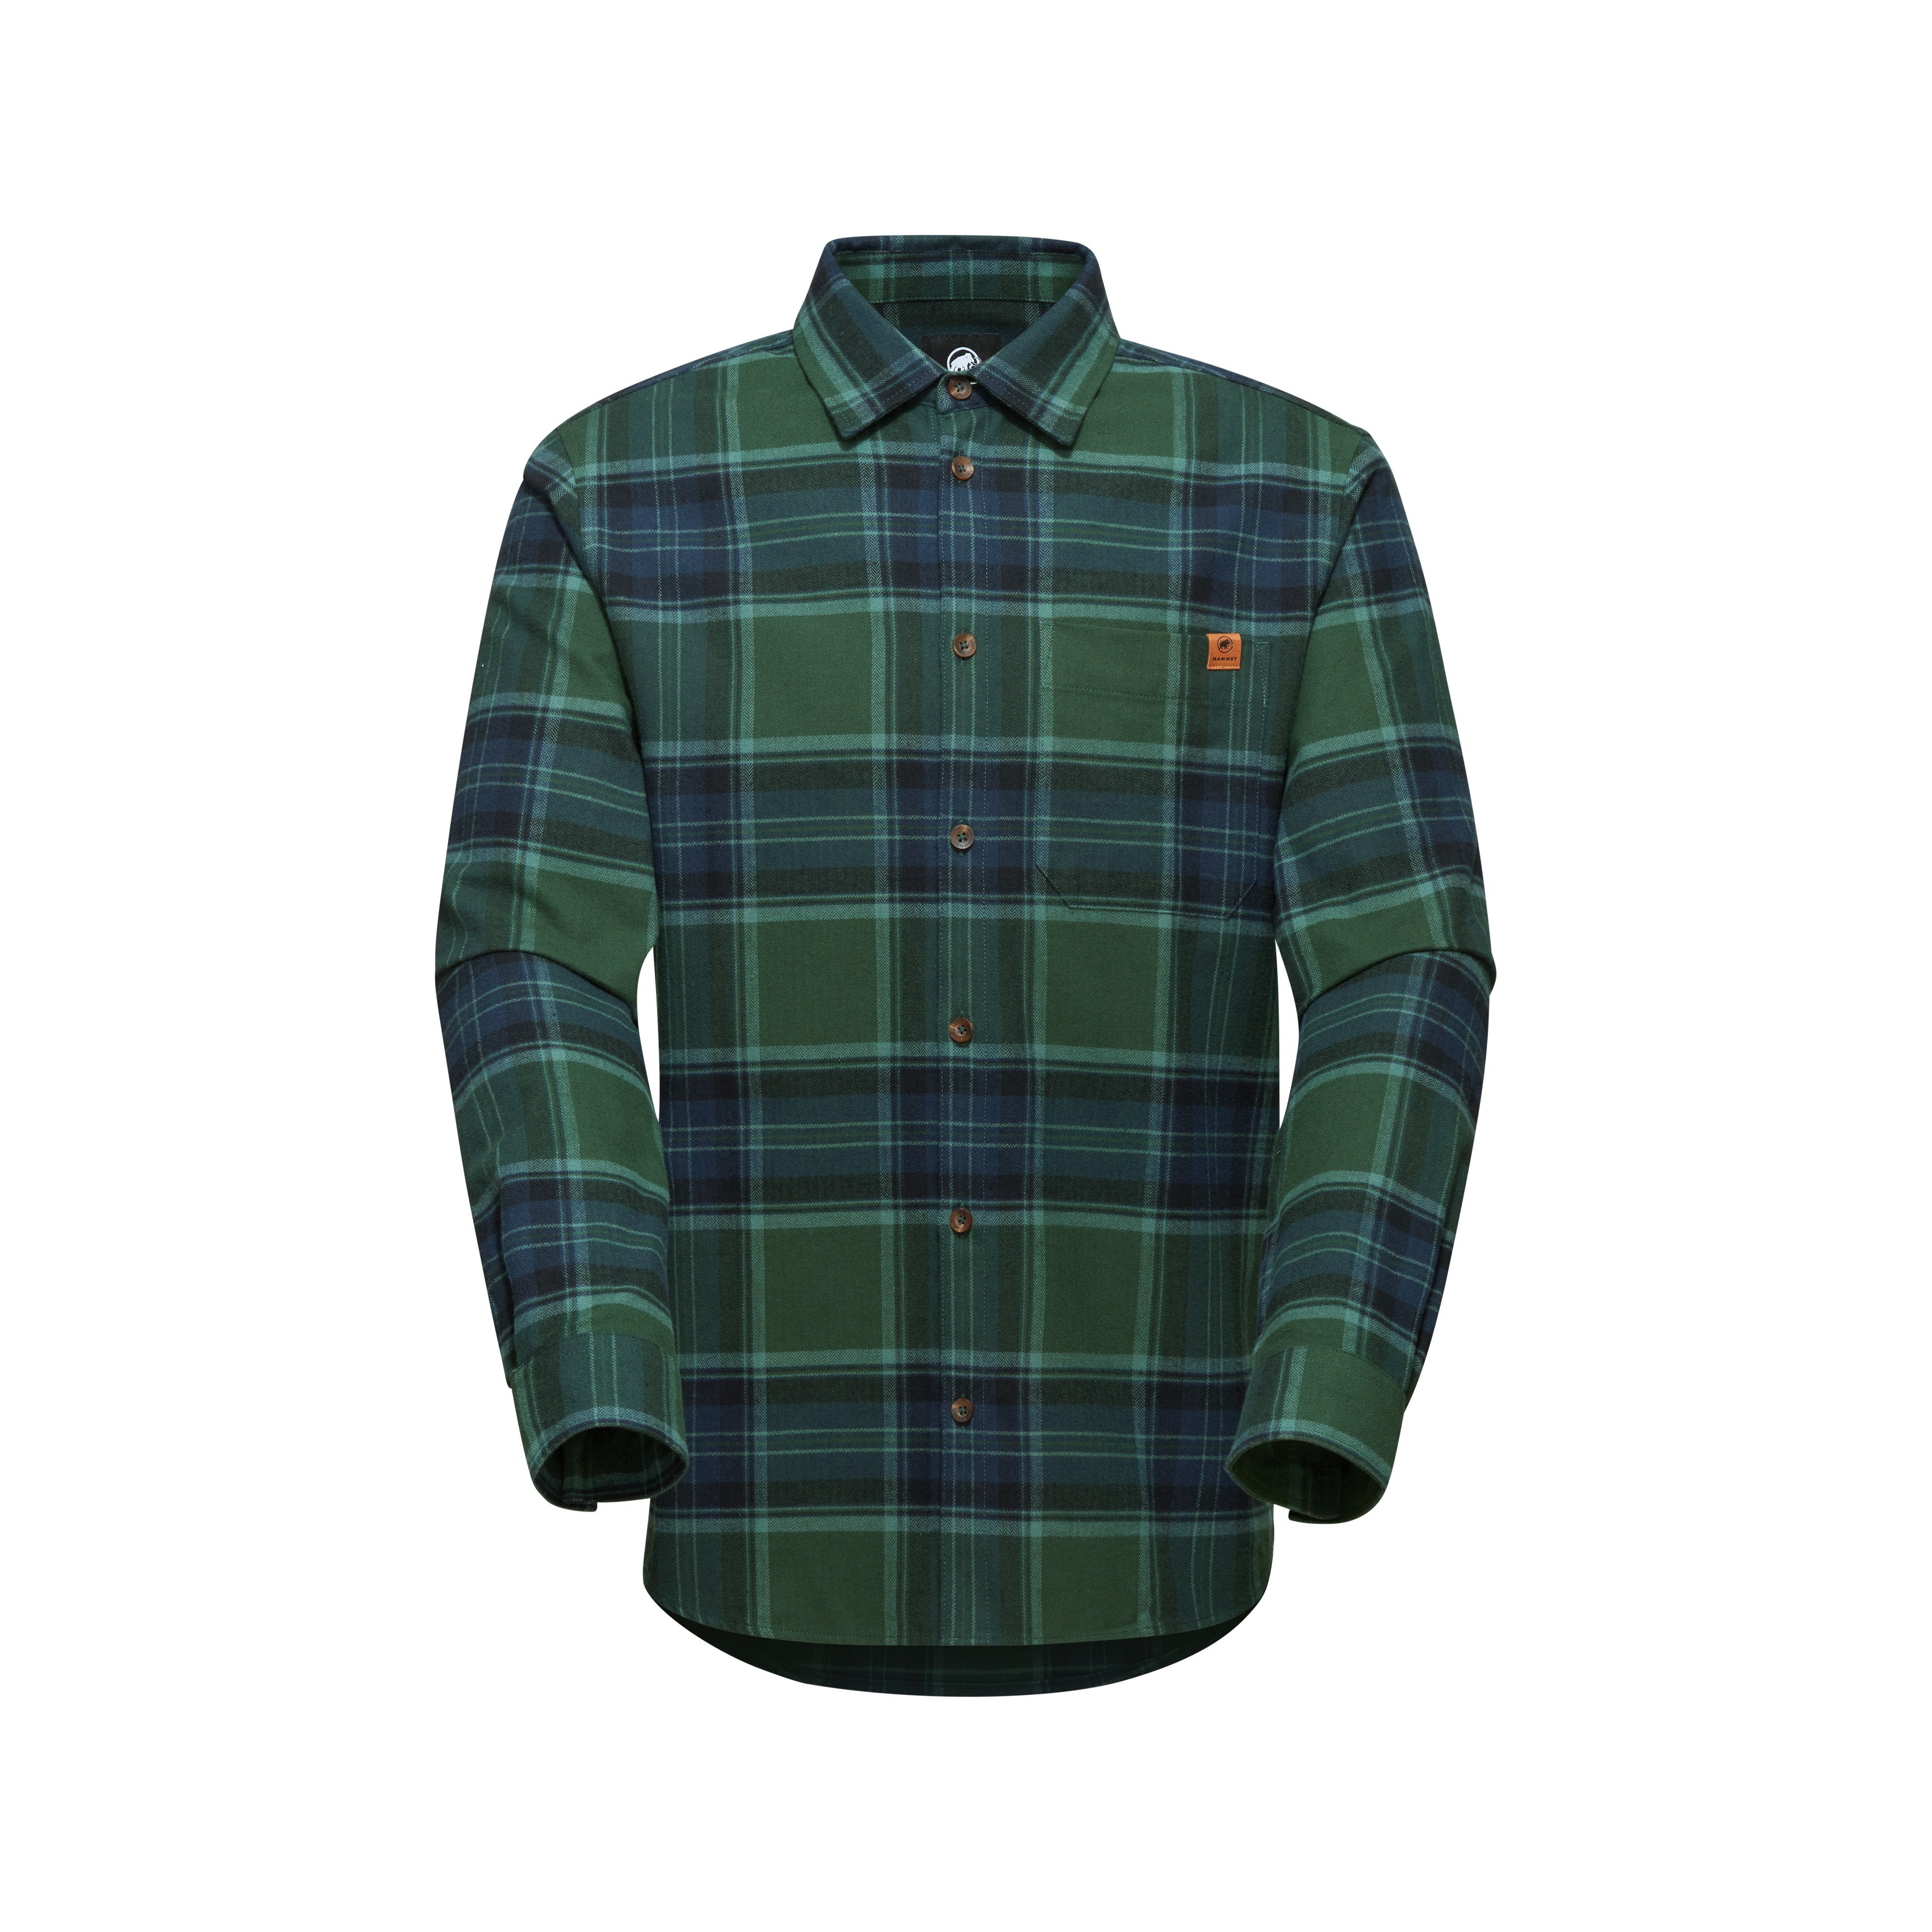 Trovat Longsleeve Shirt Men - woods-marine, M product image